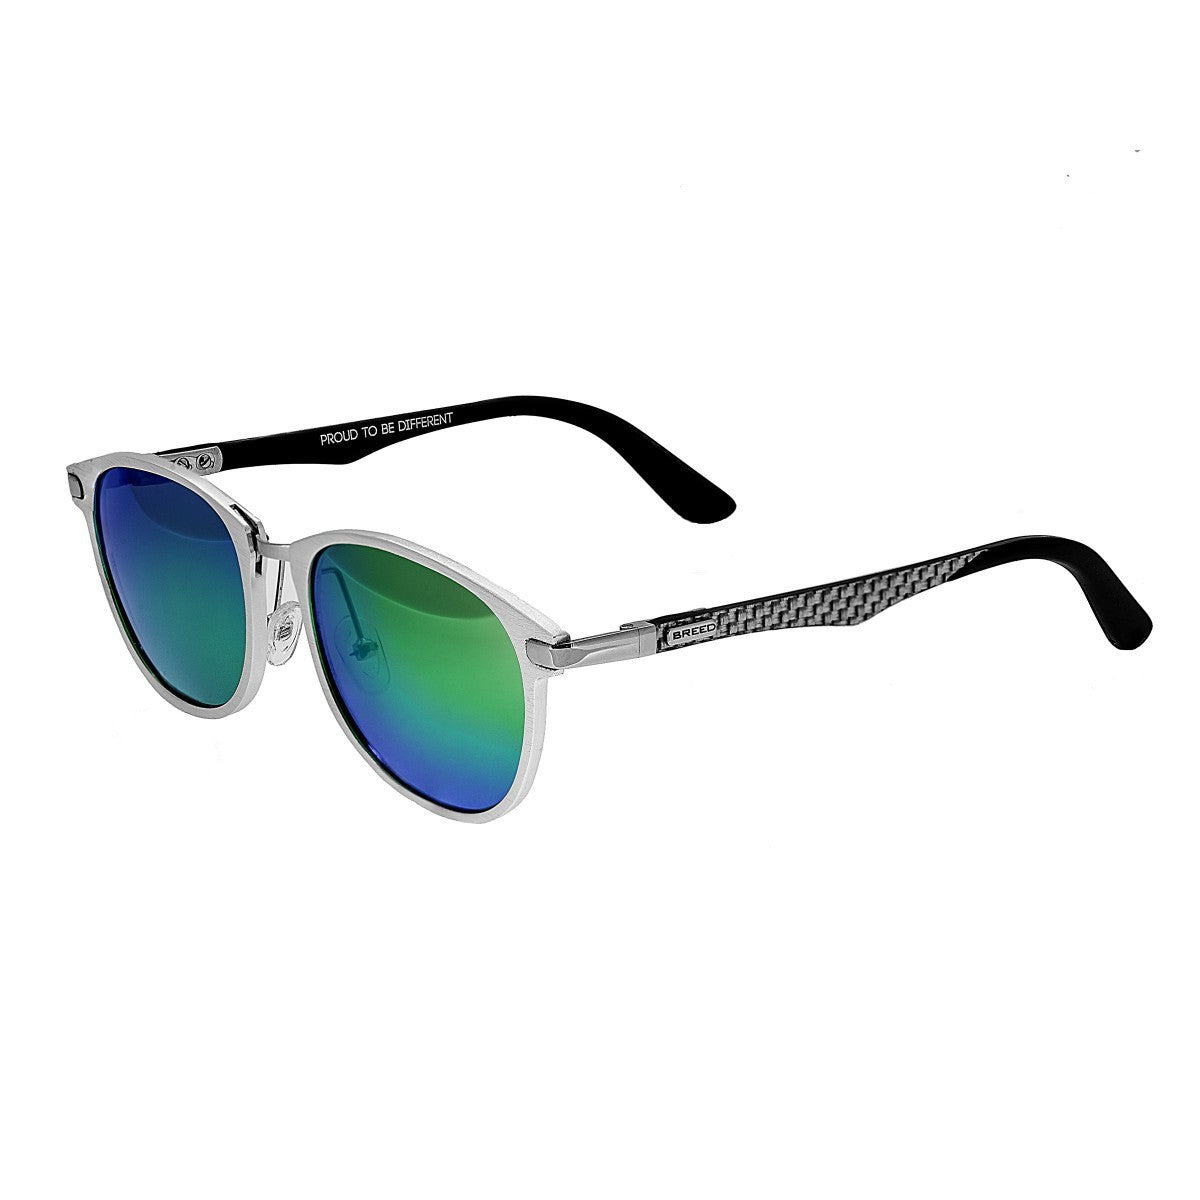 Breed Cetus Aluminium and Carbon Fiber Polarized Sunglasses - Silver/Blue - BSG027SR